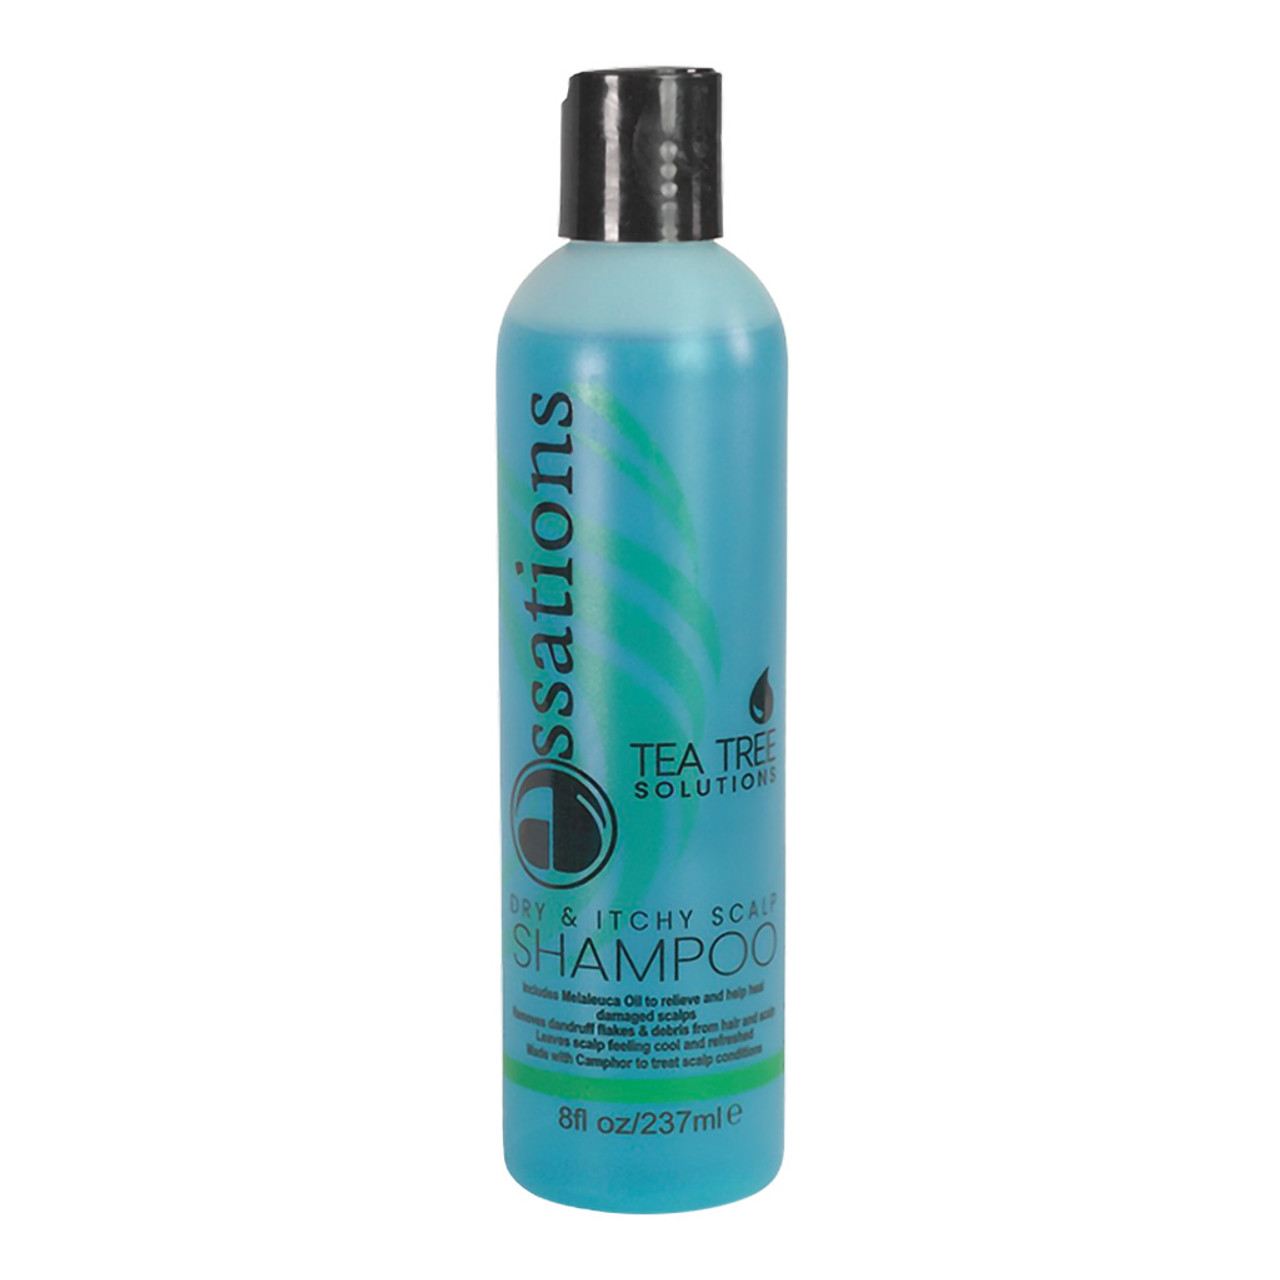 Korrespondance Energize Forvirrede Essations Tea Tree Solutions Dry & Itchy Scalp Shampoo (8 oz.) -  NaturallyCurly